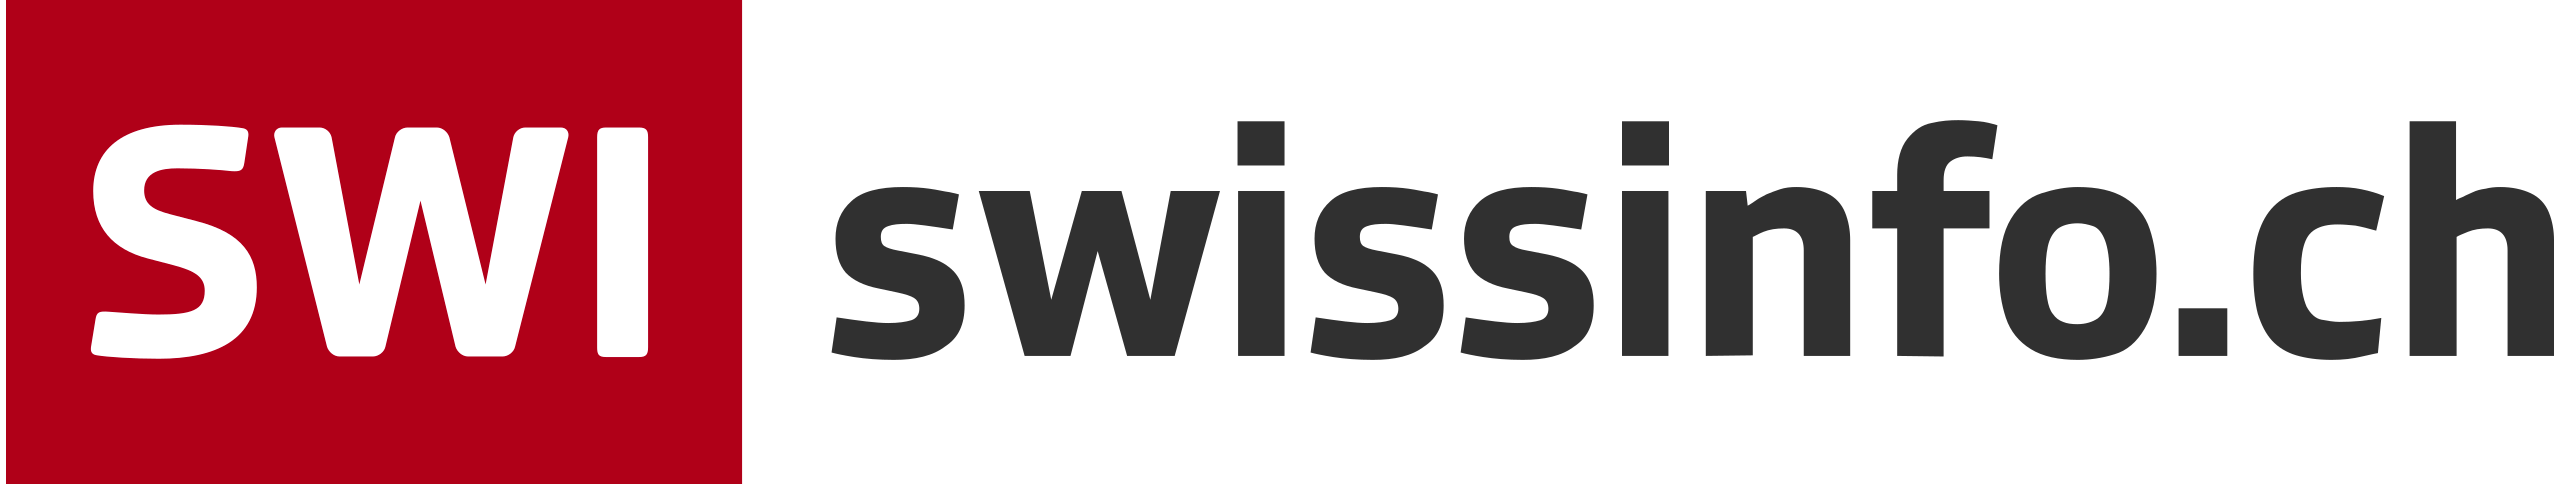 Swissinfo company logo.